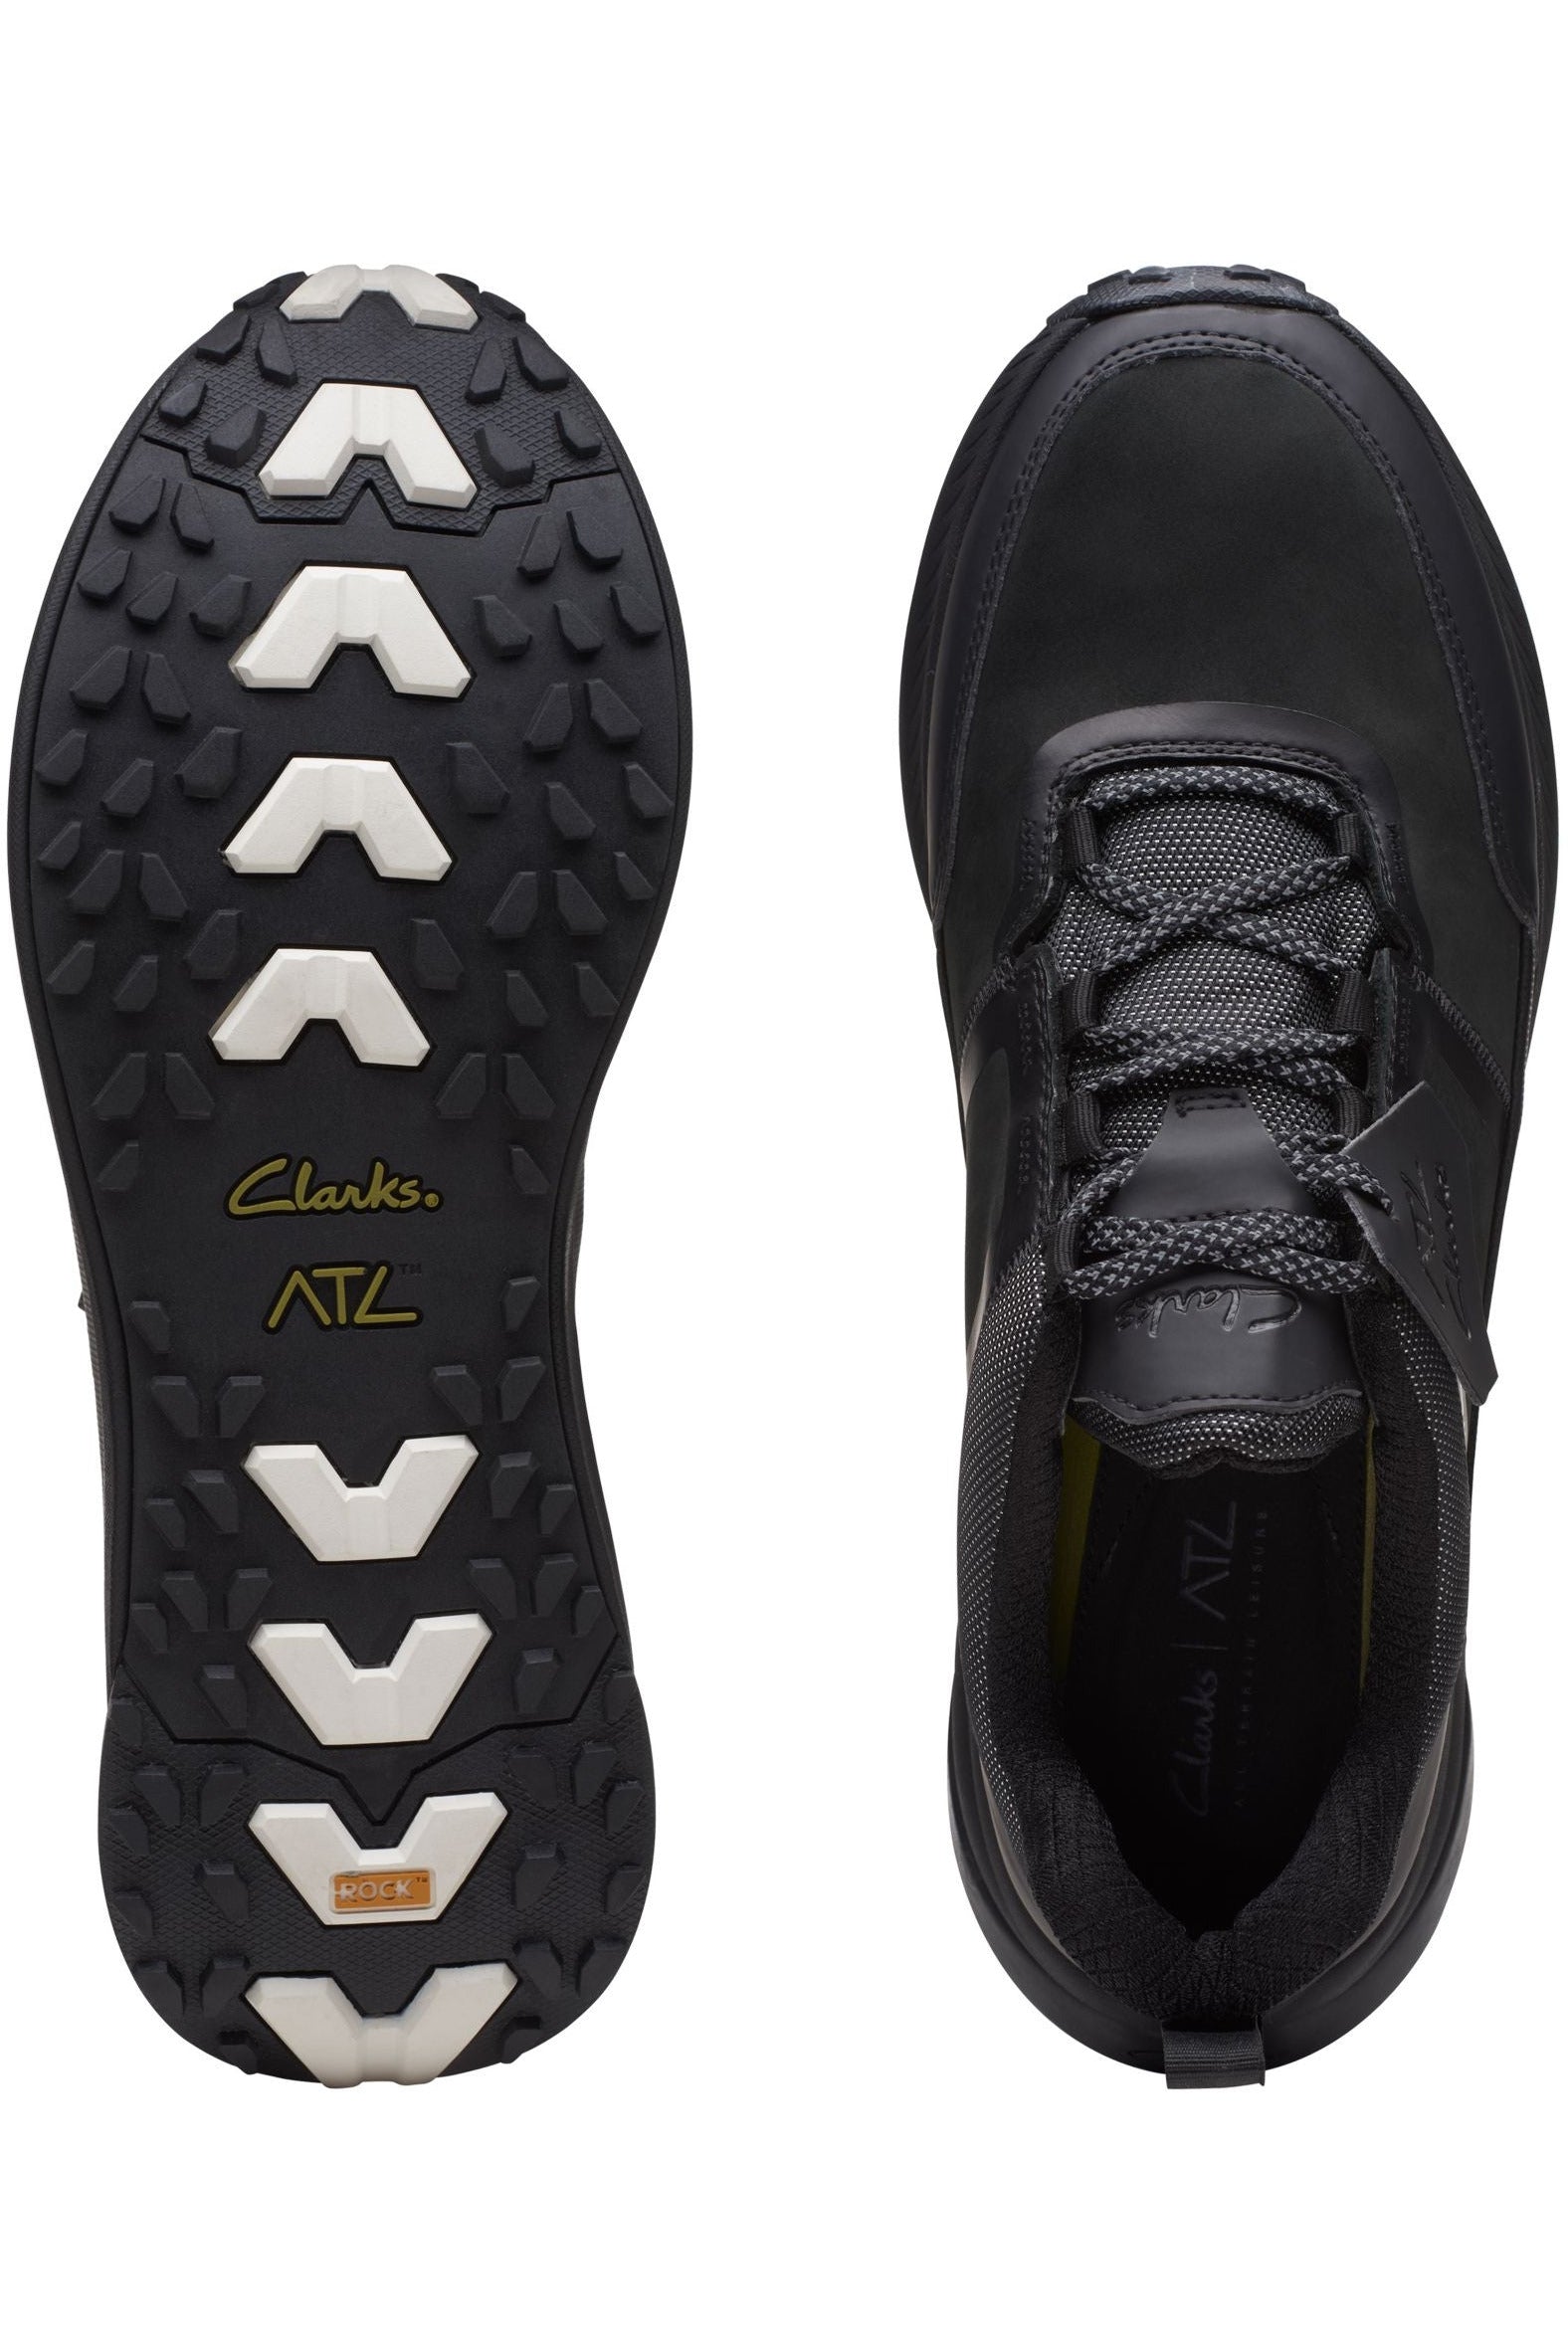 Árbol de tochi Empeorando embrague Clarks ATL Trail Lace waterproof walking shoe at Meeks Shoes